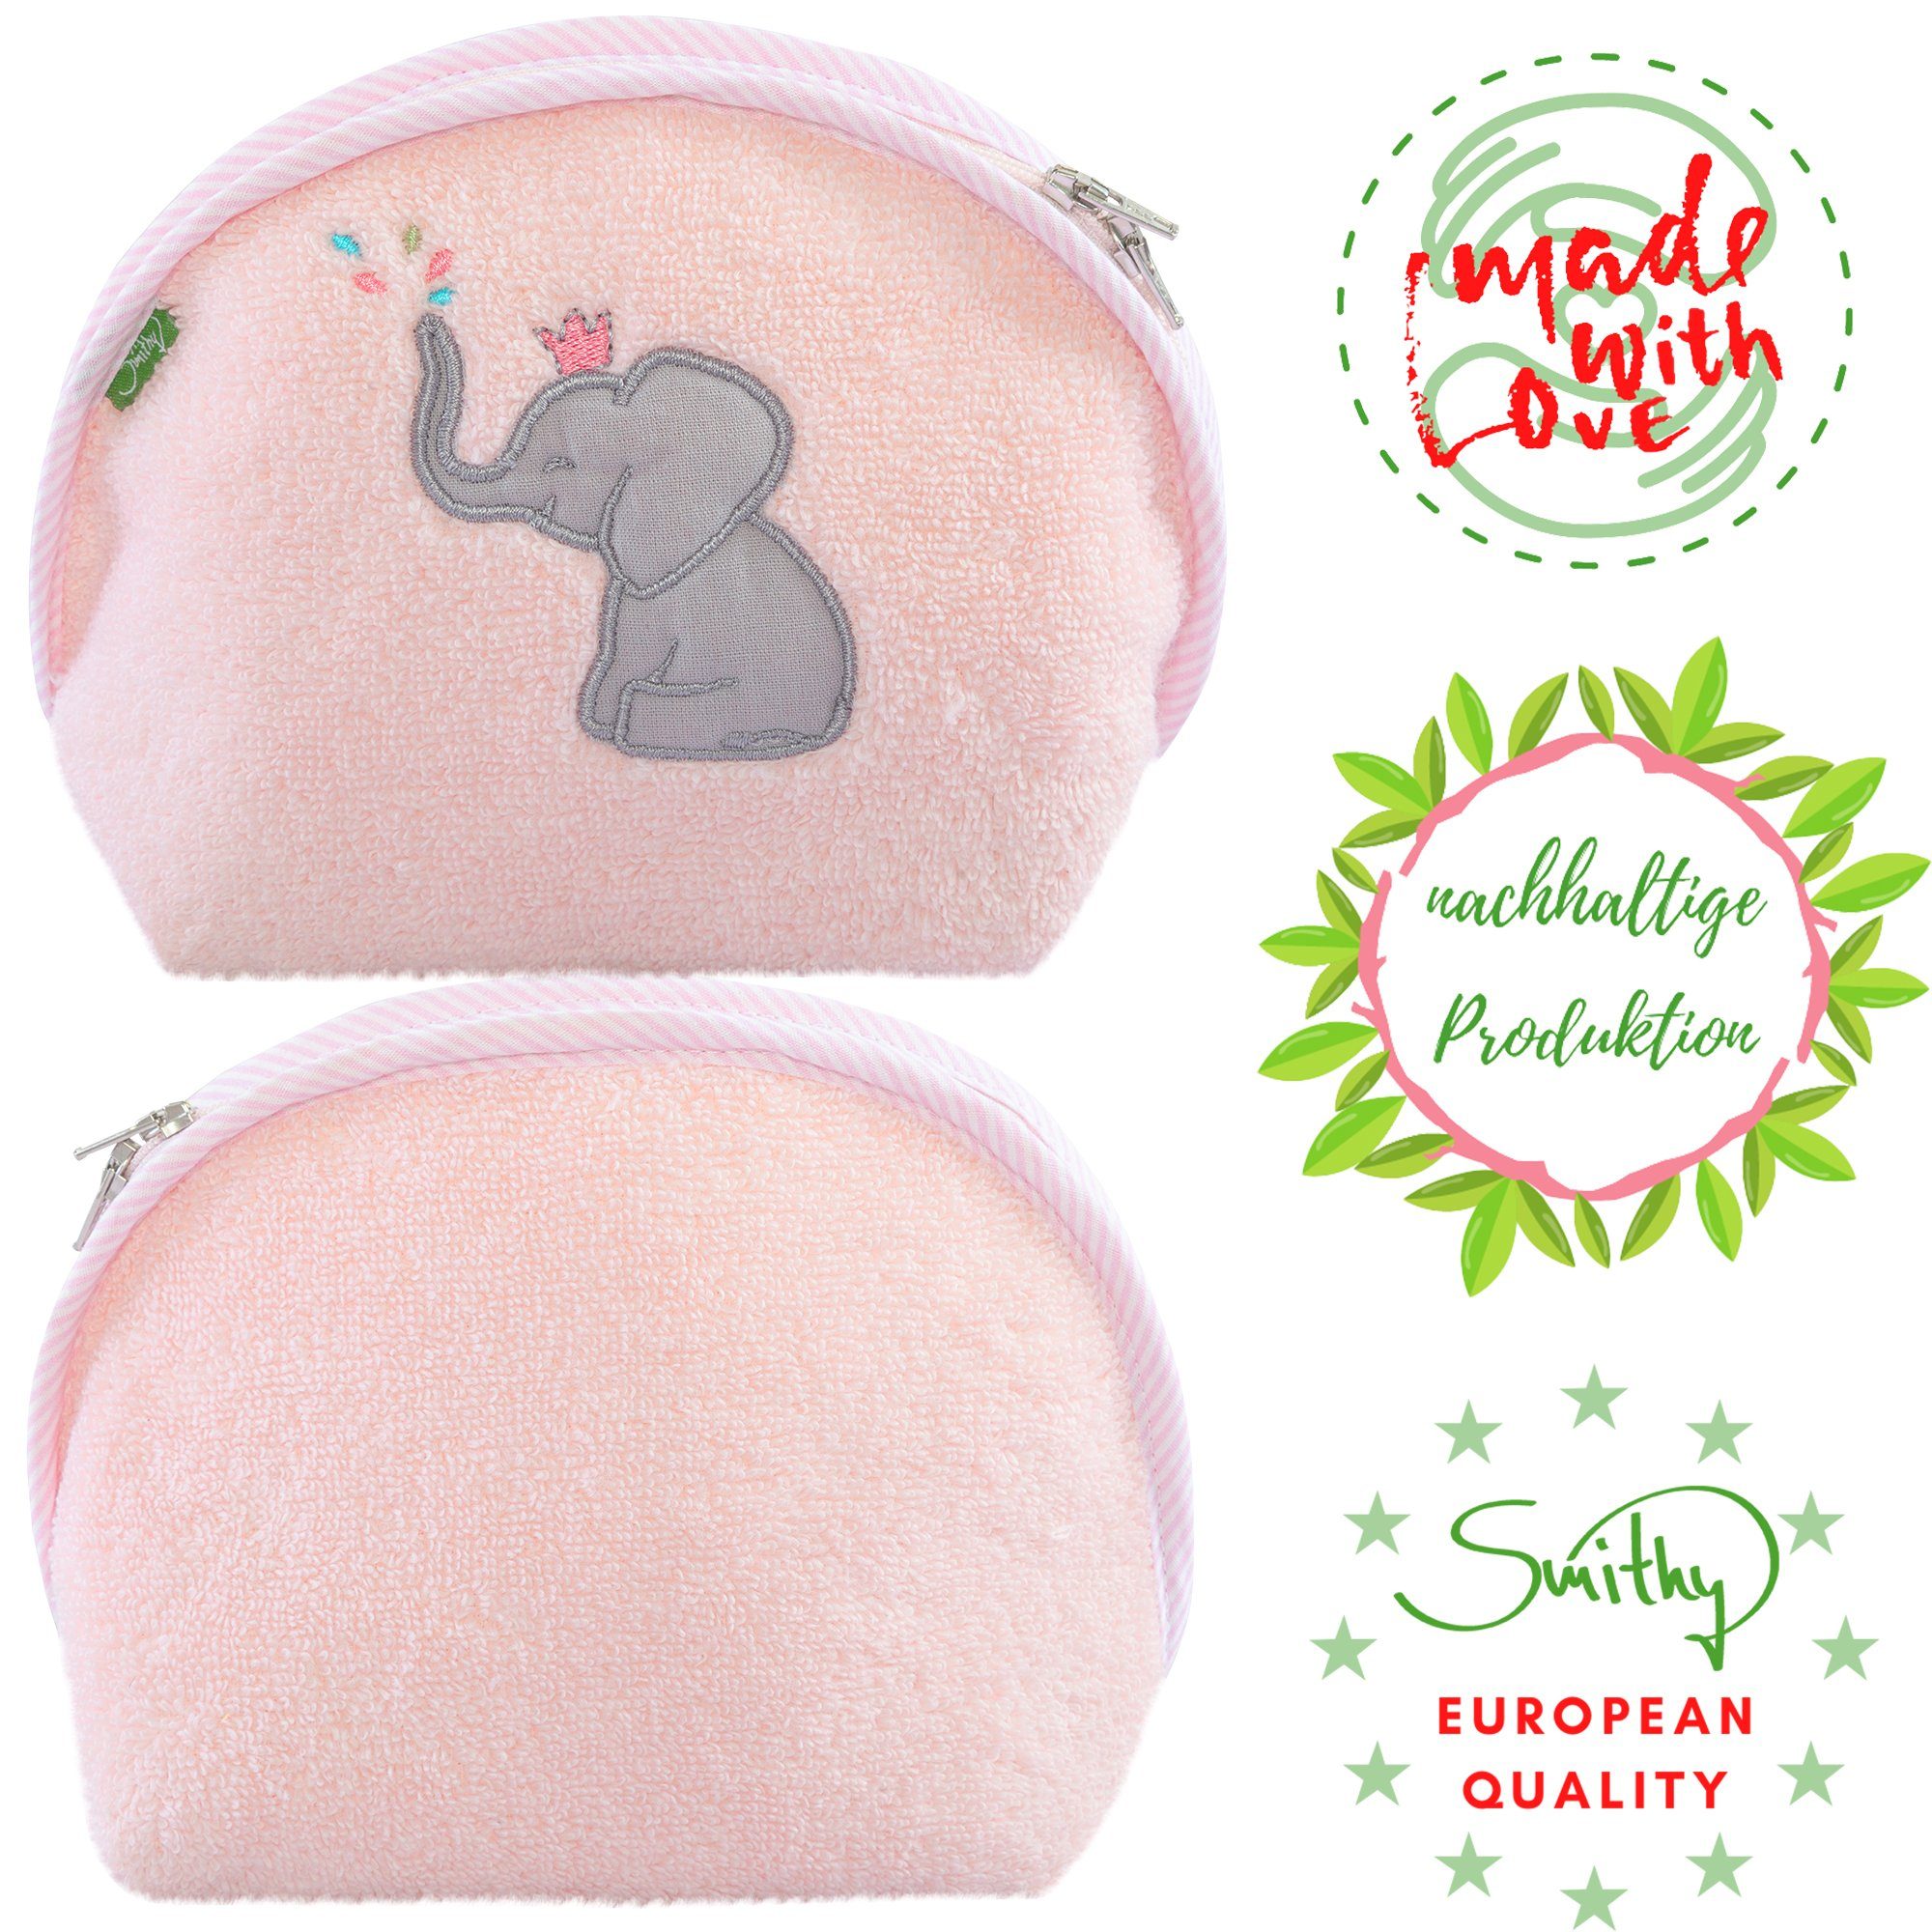 Smithy Kulturbeutel Waschtasche Elefant, (1-tlg) rosa